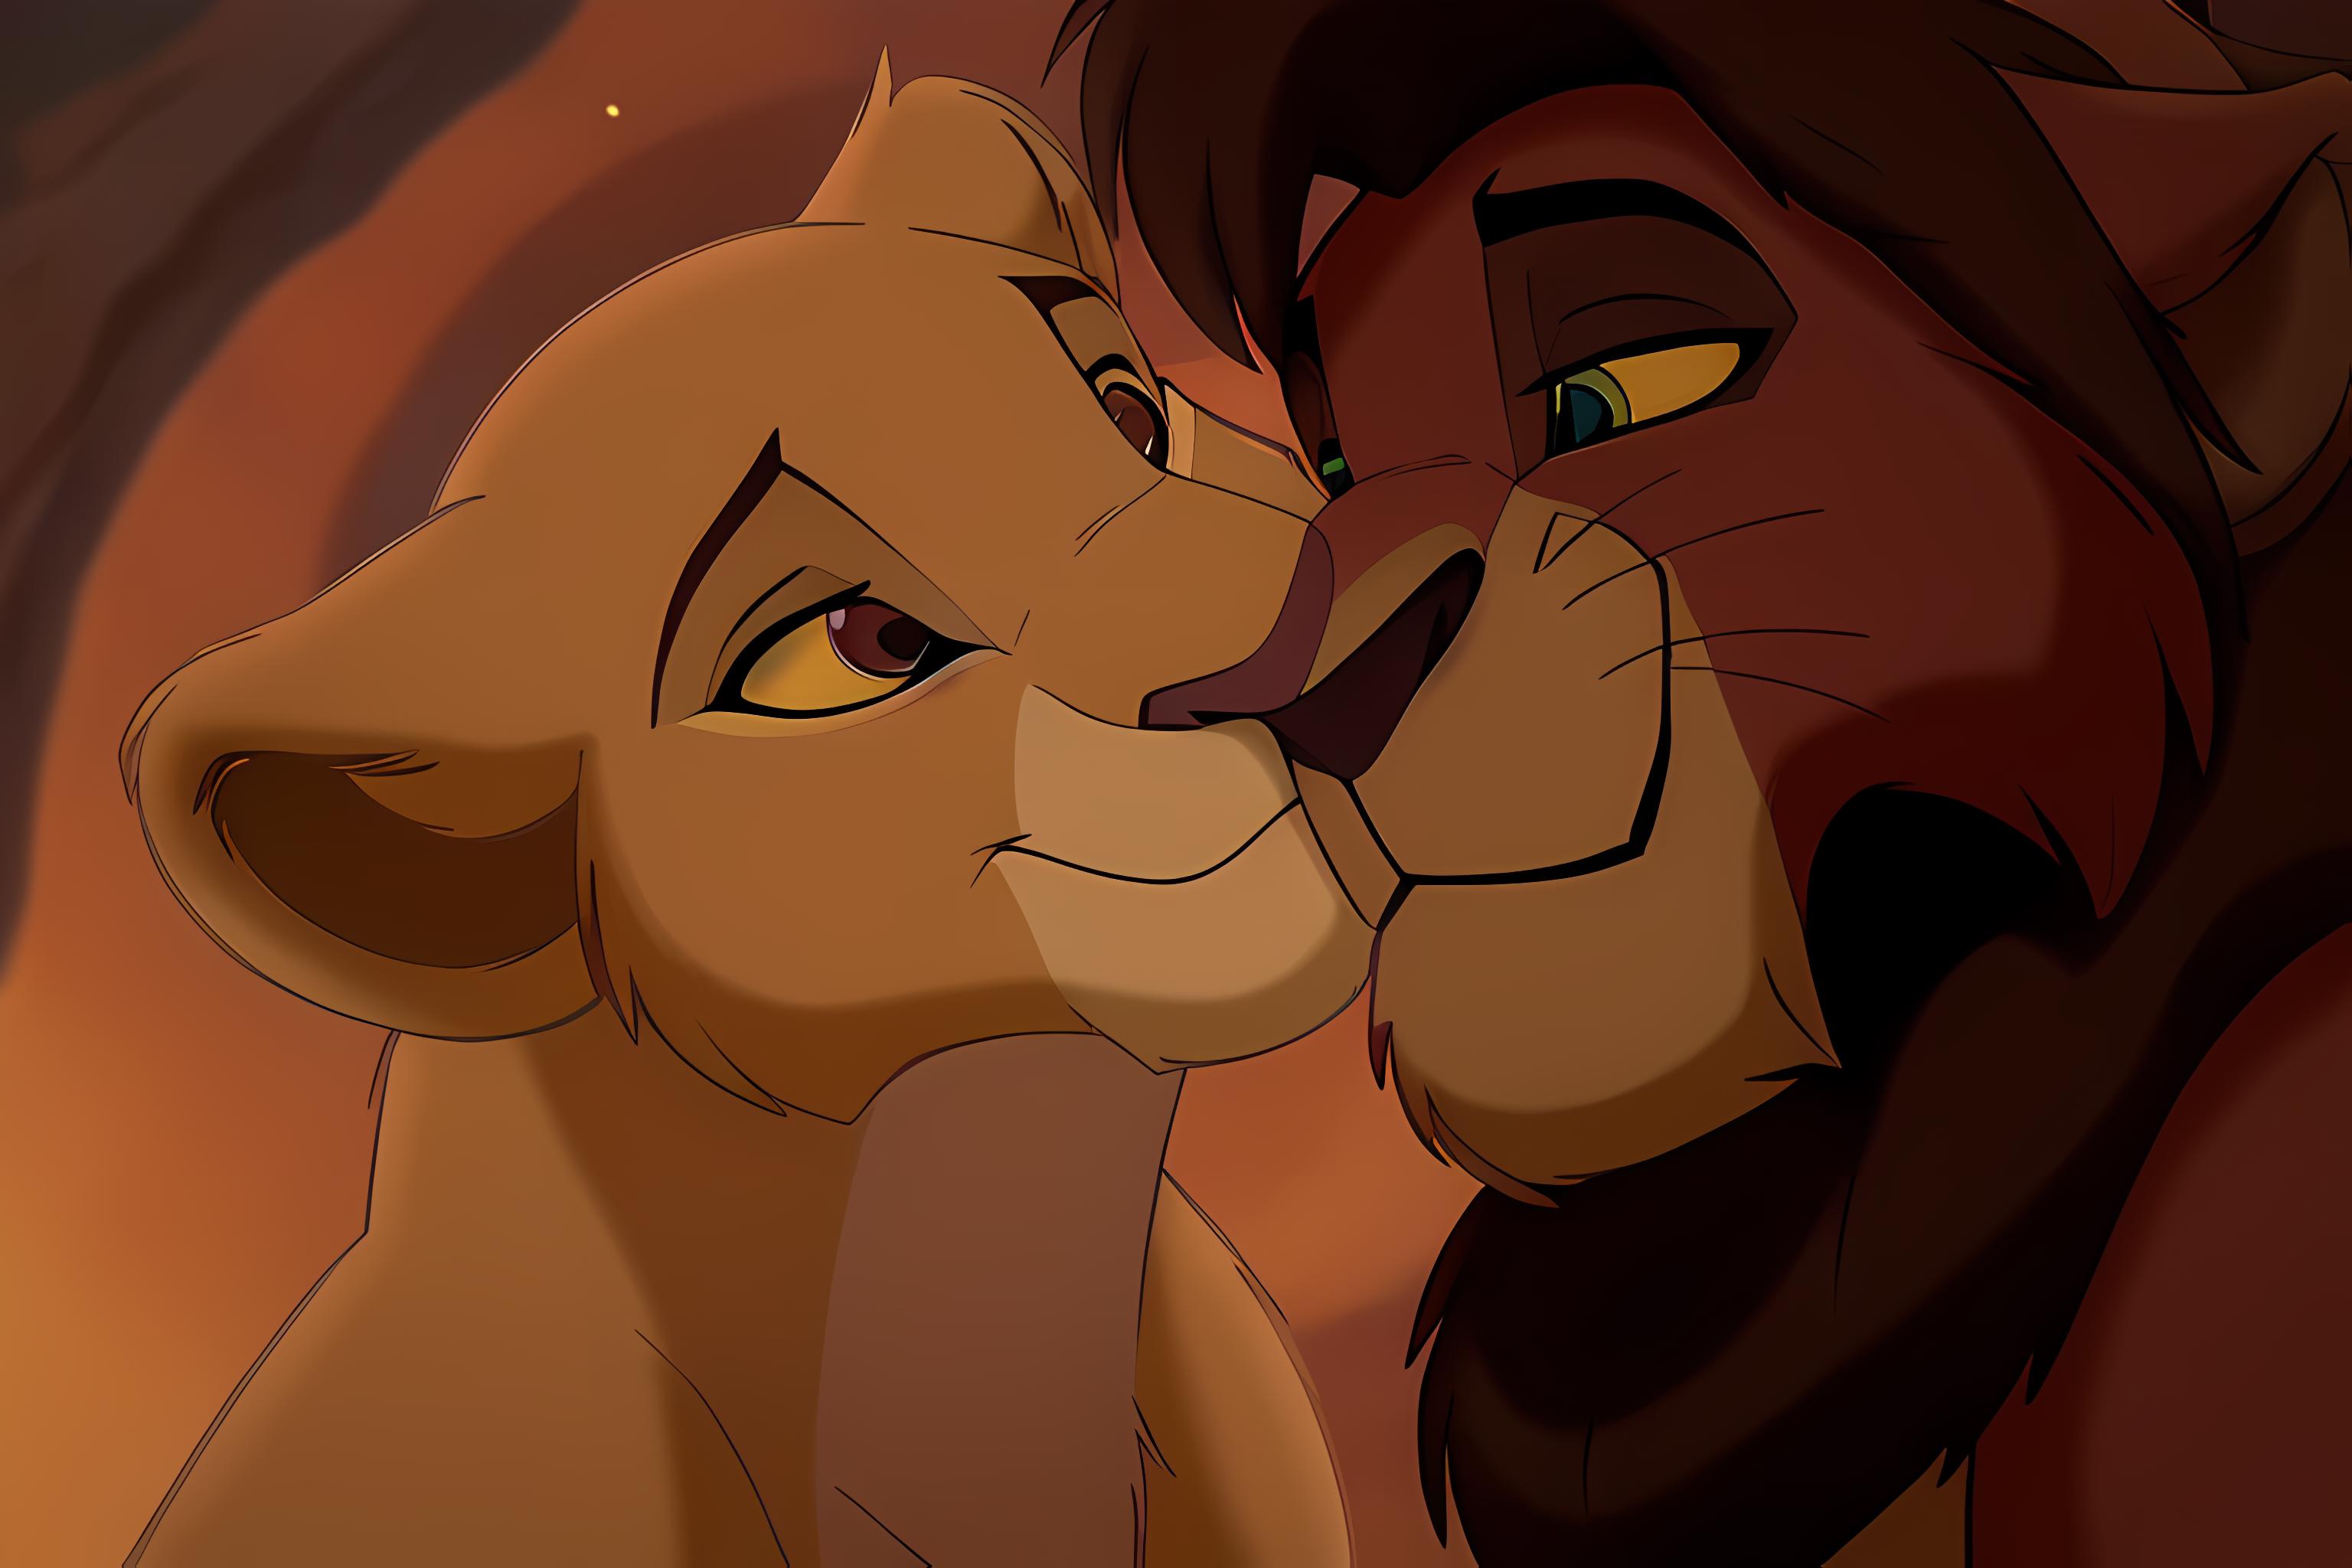 Kiara And Kovu from Disney The Lion King 2 image by AlianisL